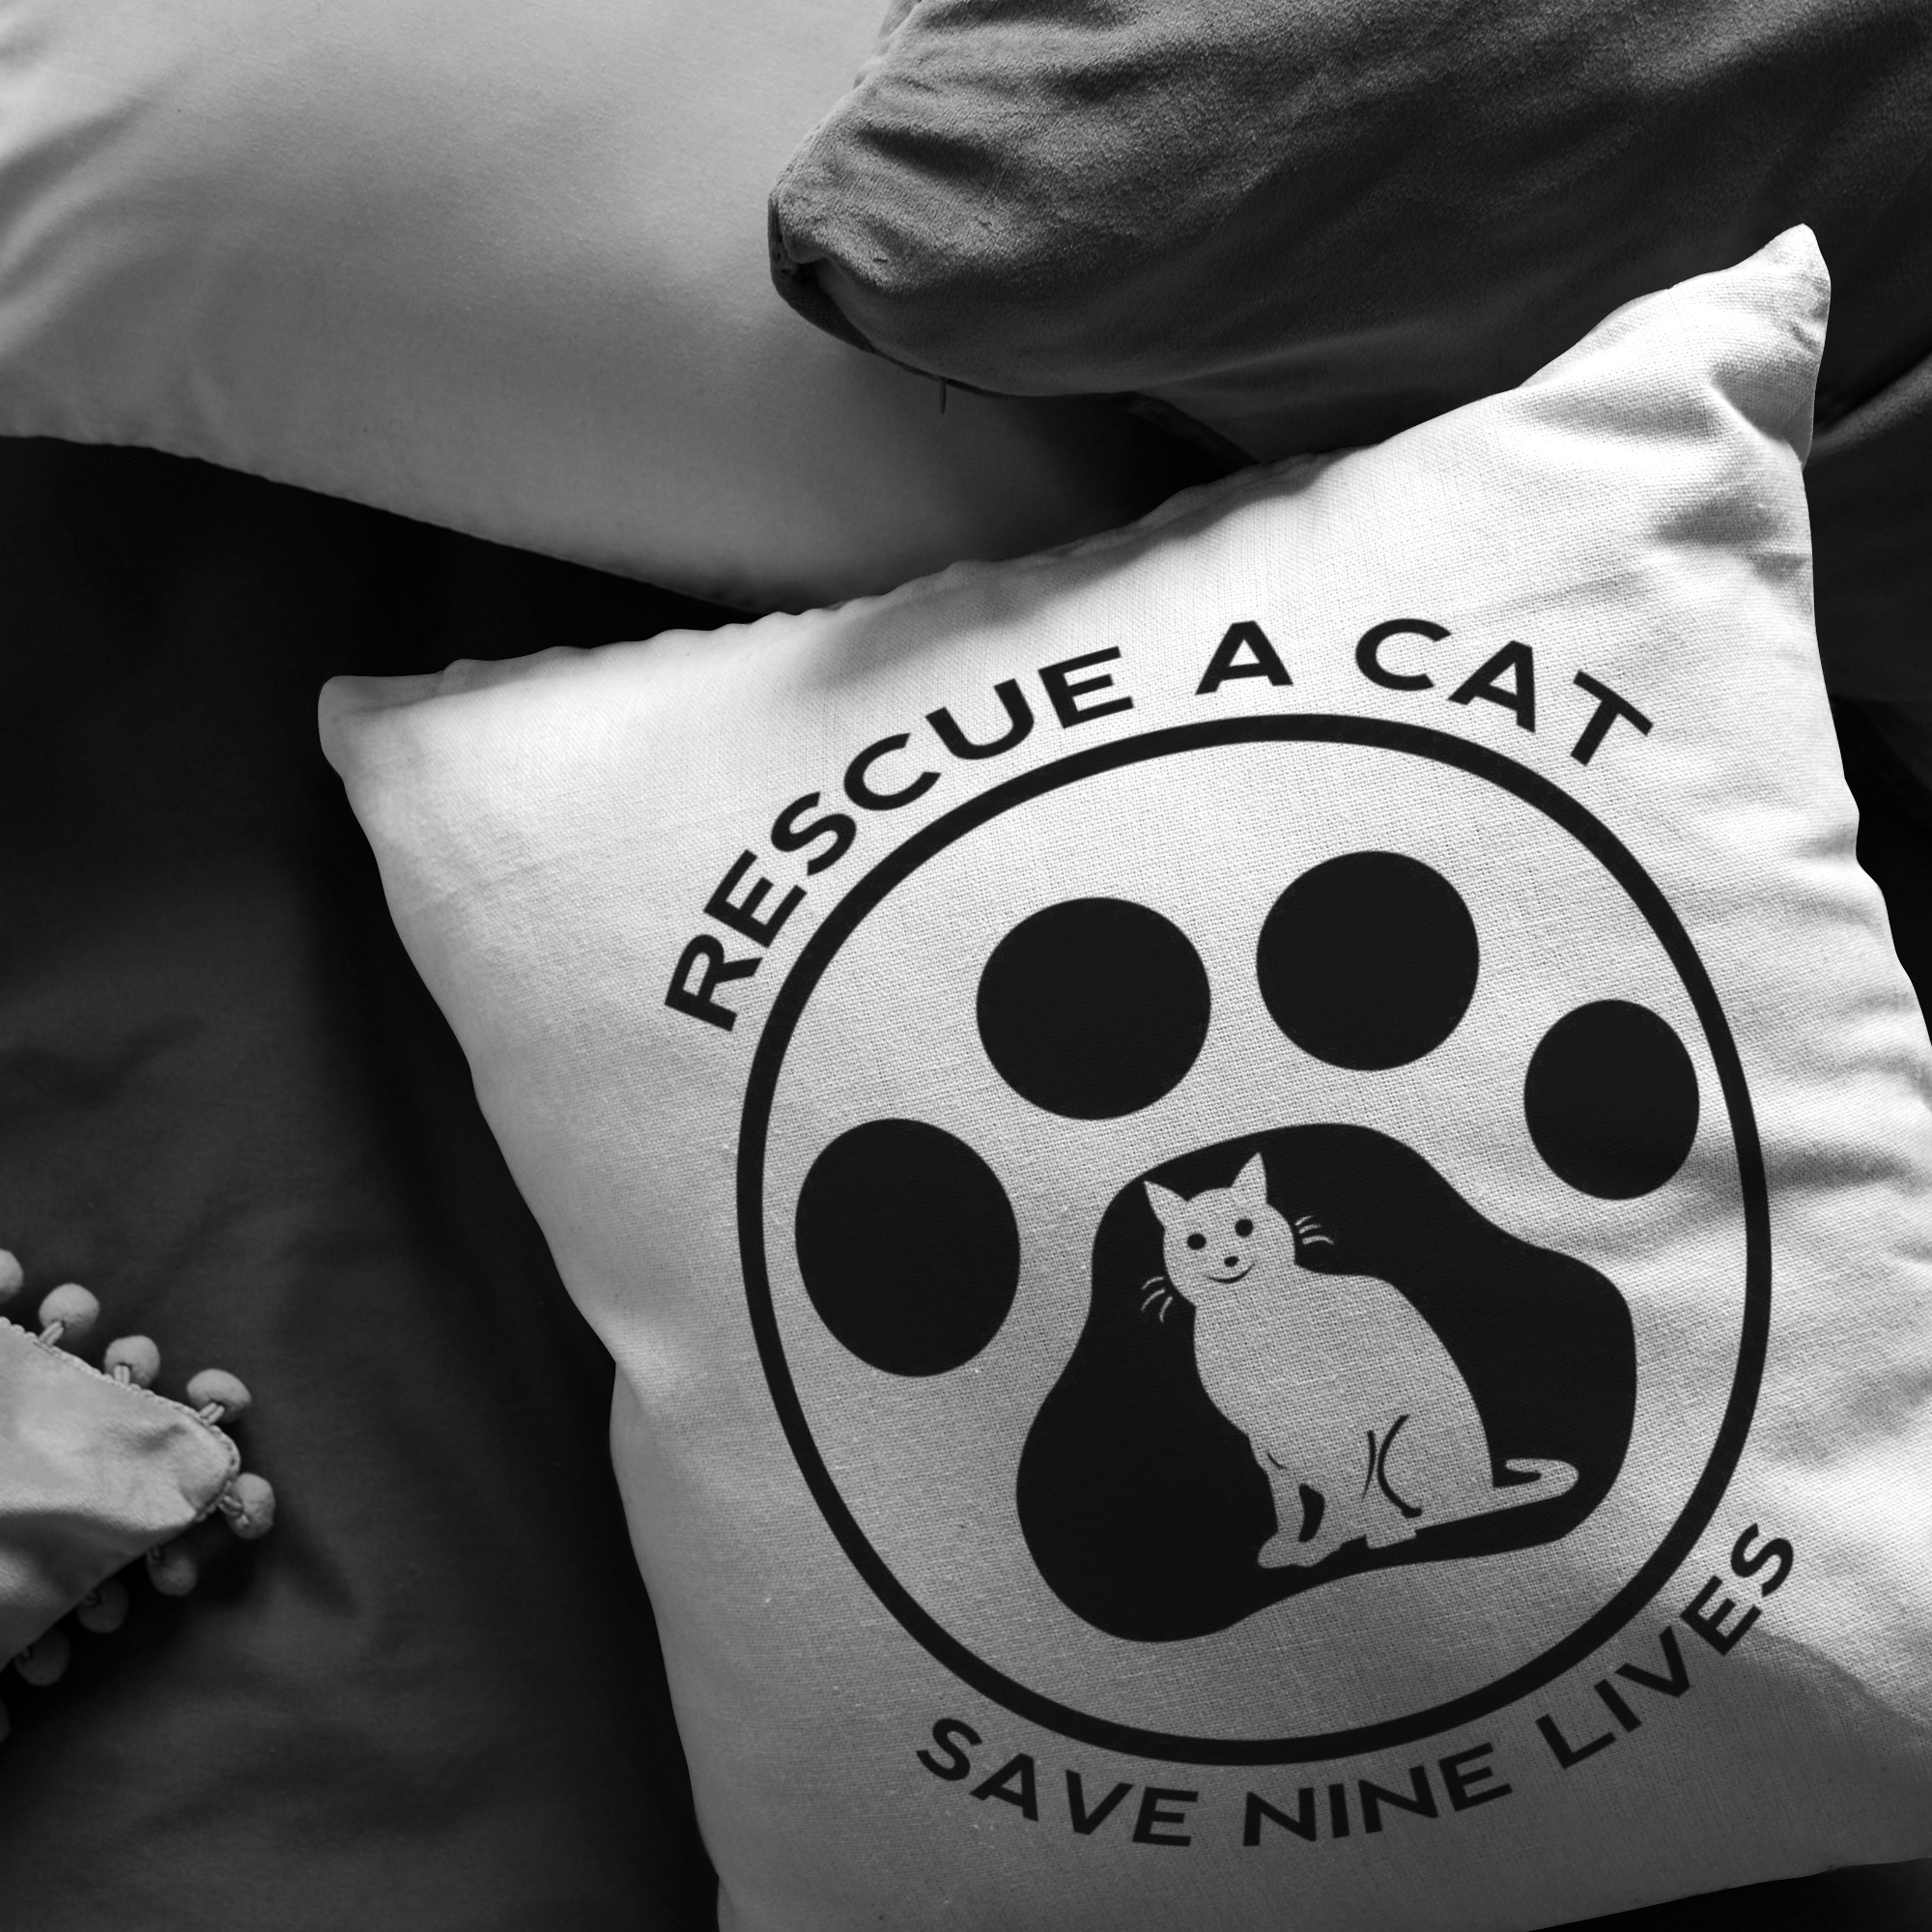 Rescue A Cat, Save Nine Lives - Pillow